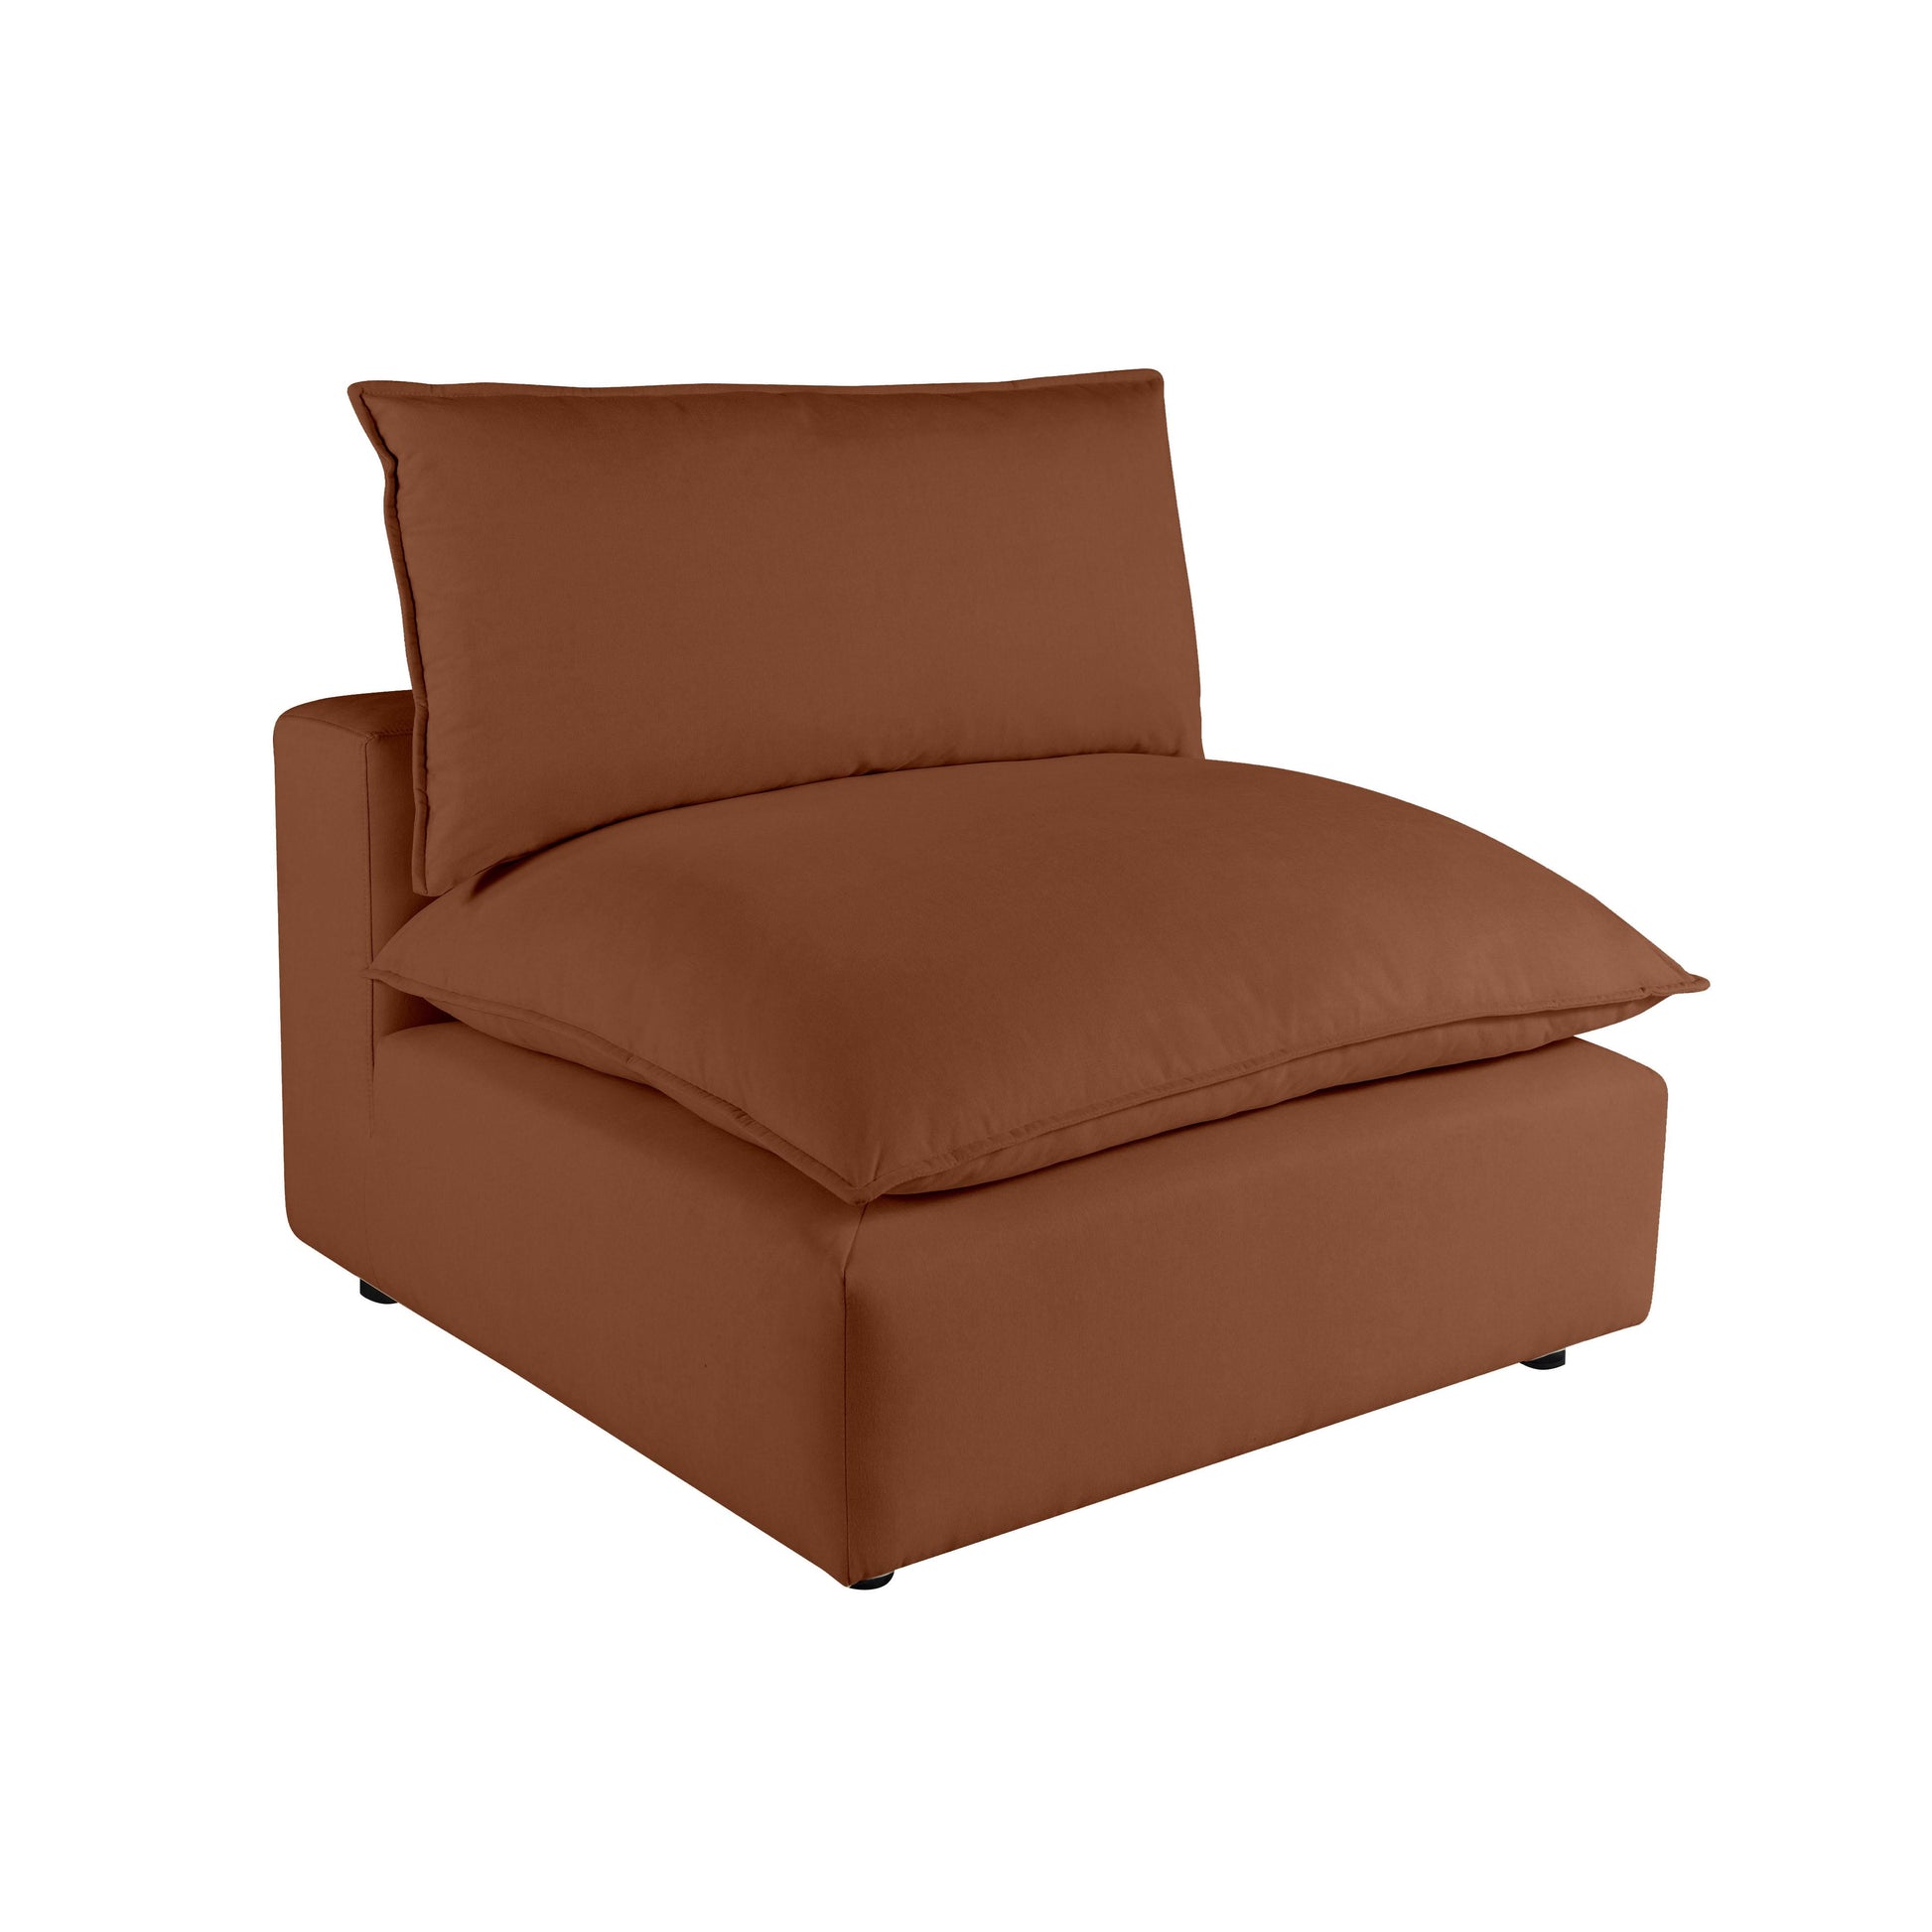 Tov Furniture Cali Rust Armless Chair